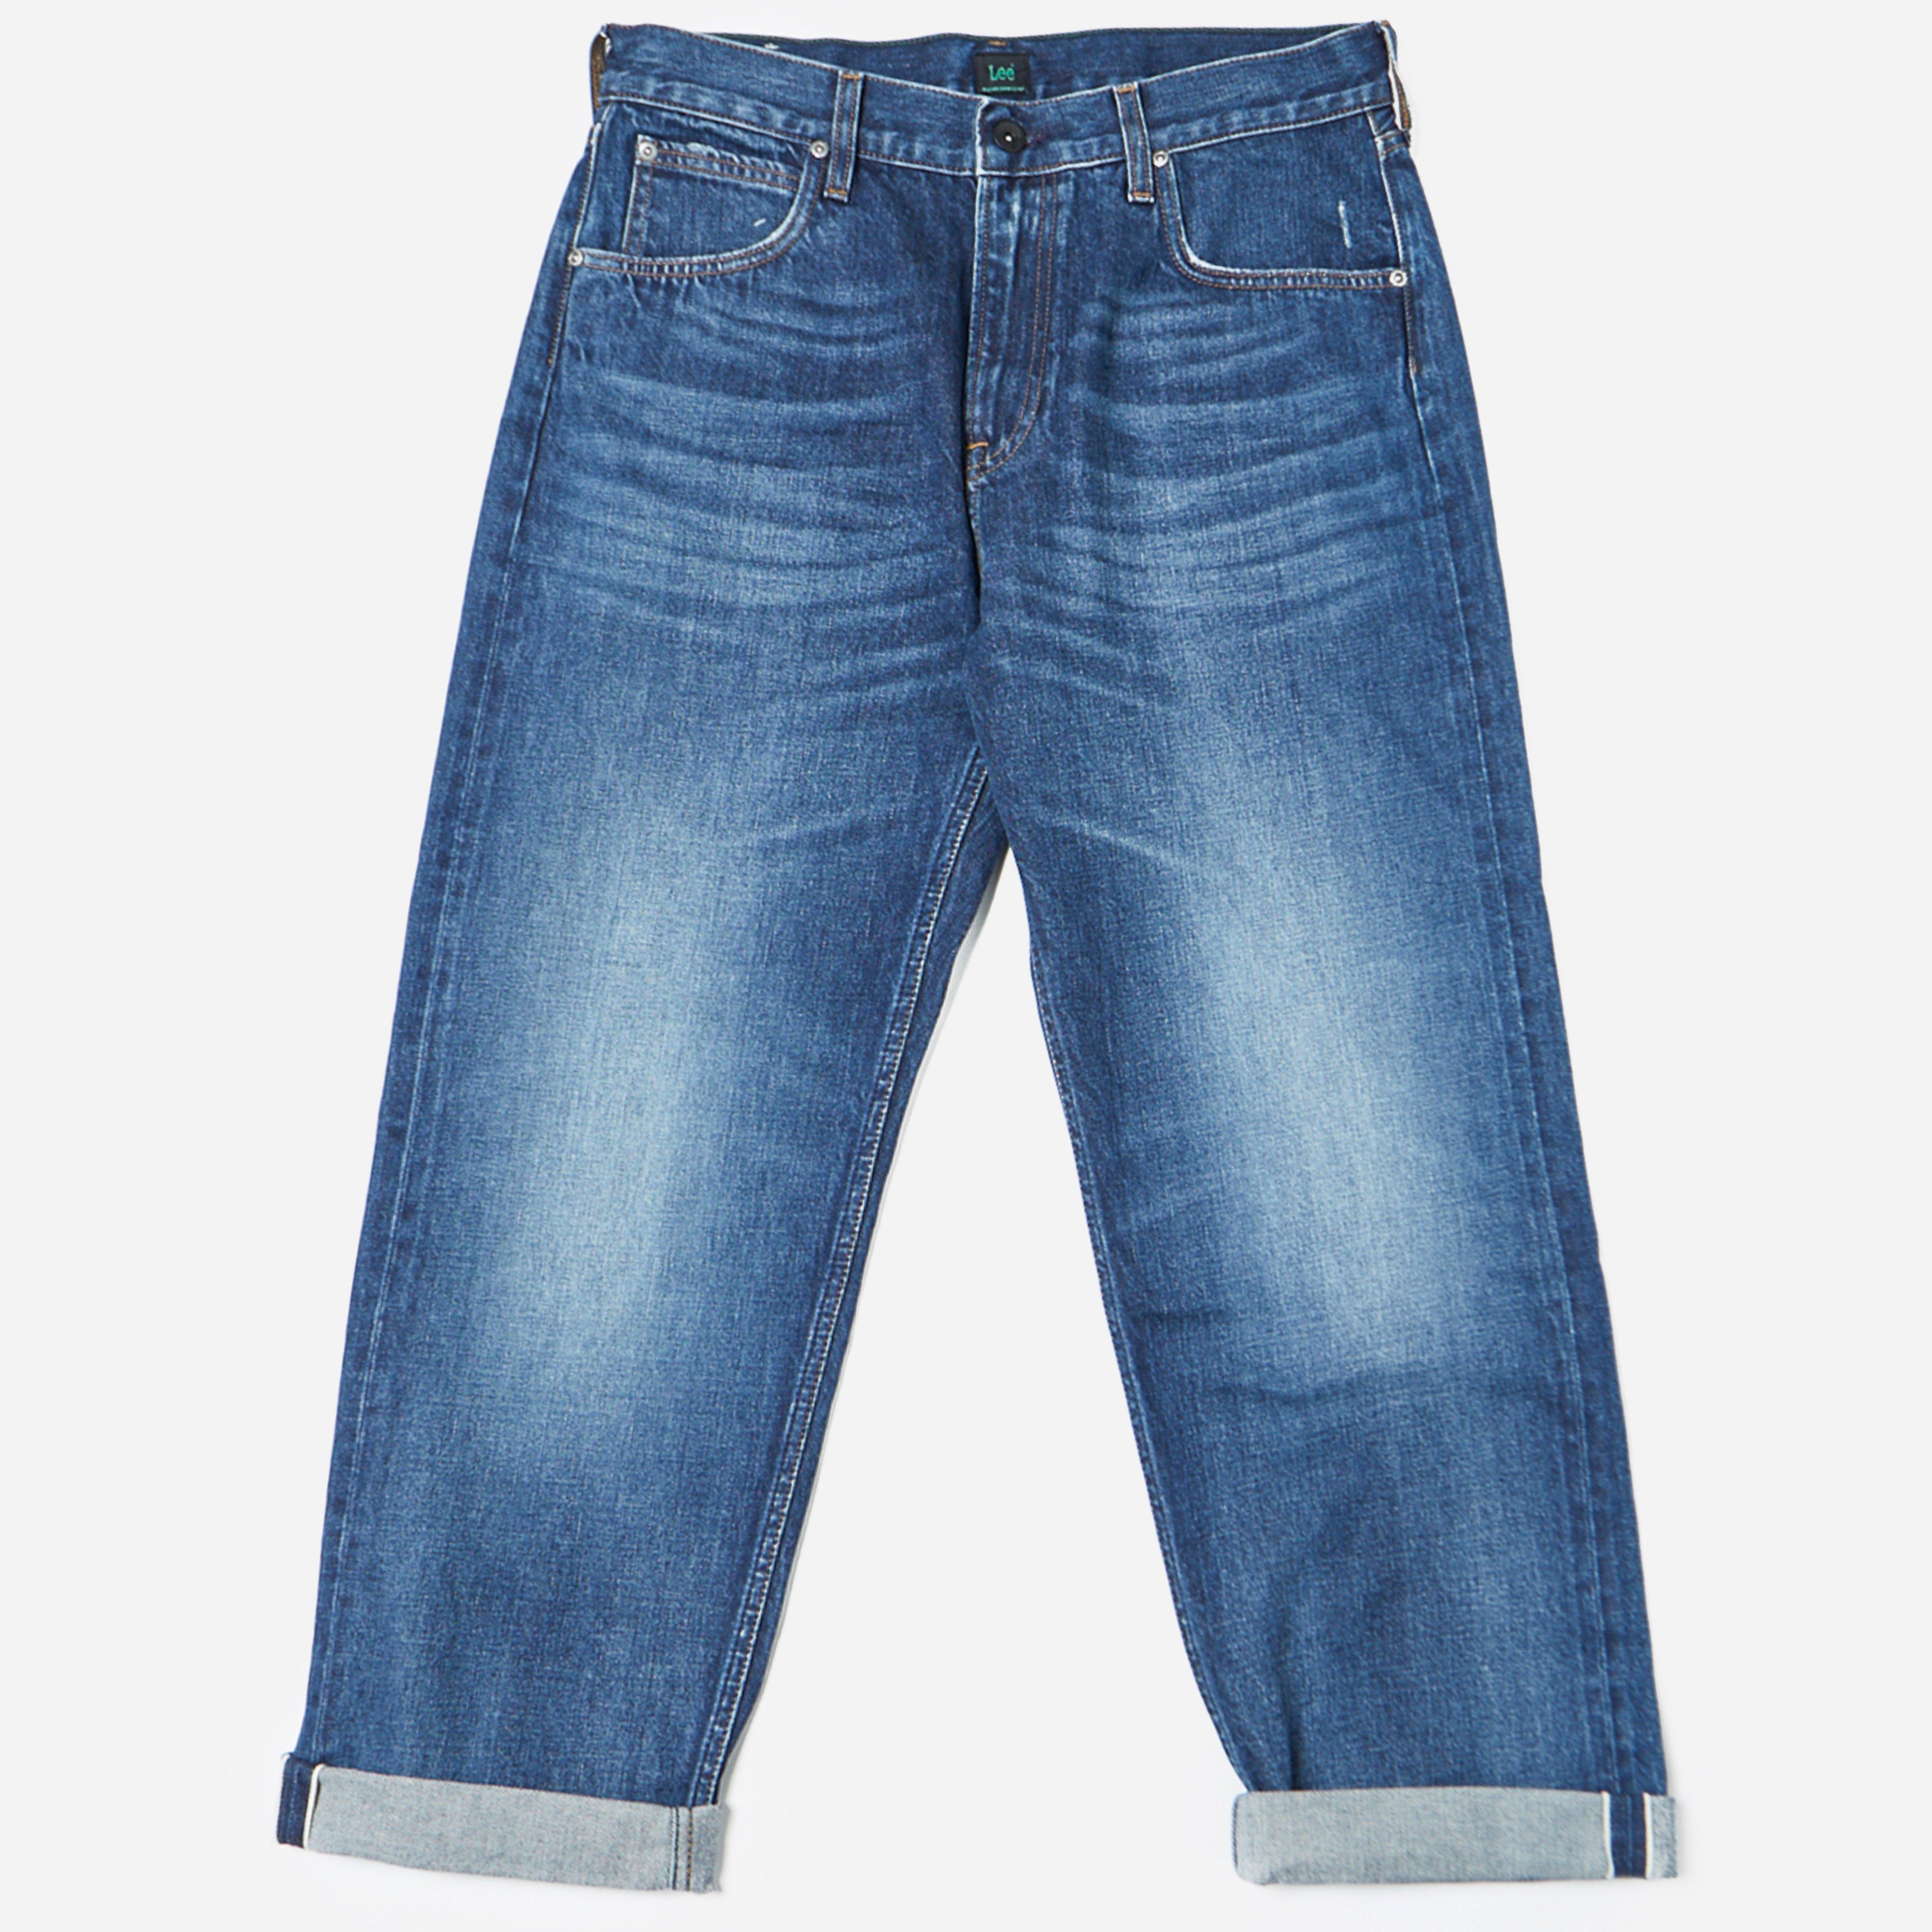 Lyst - Lee Jeans Loose Straight Wide Leg Jean in Blue for Men